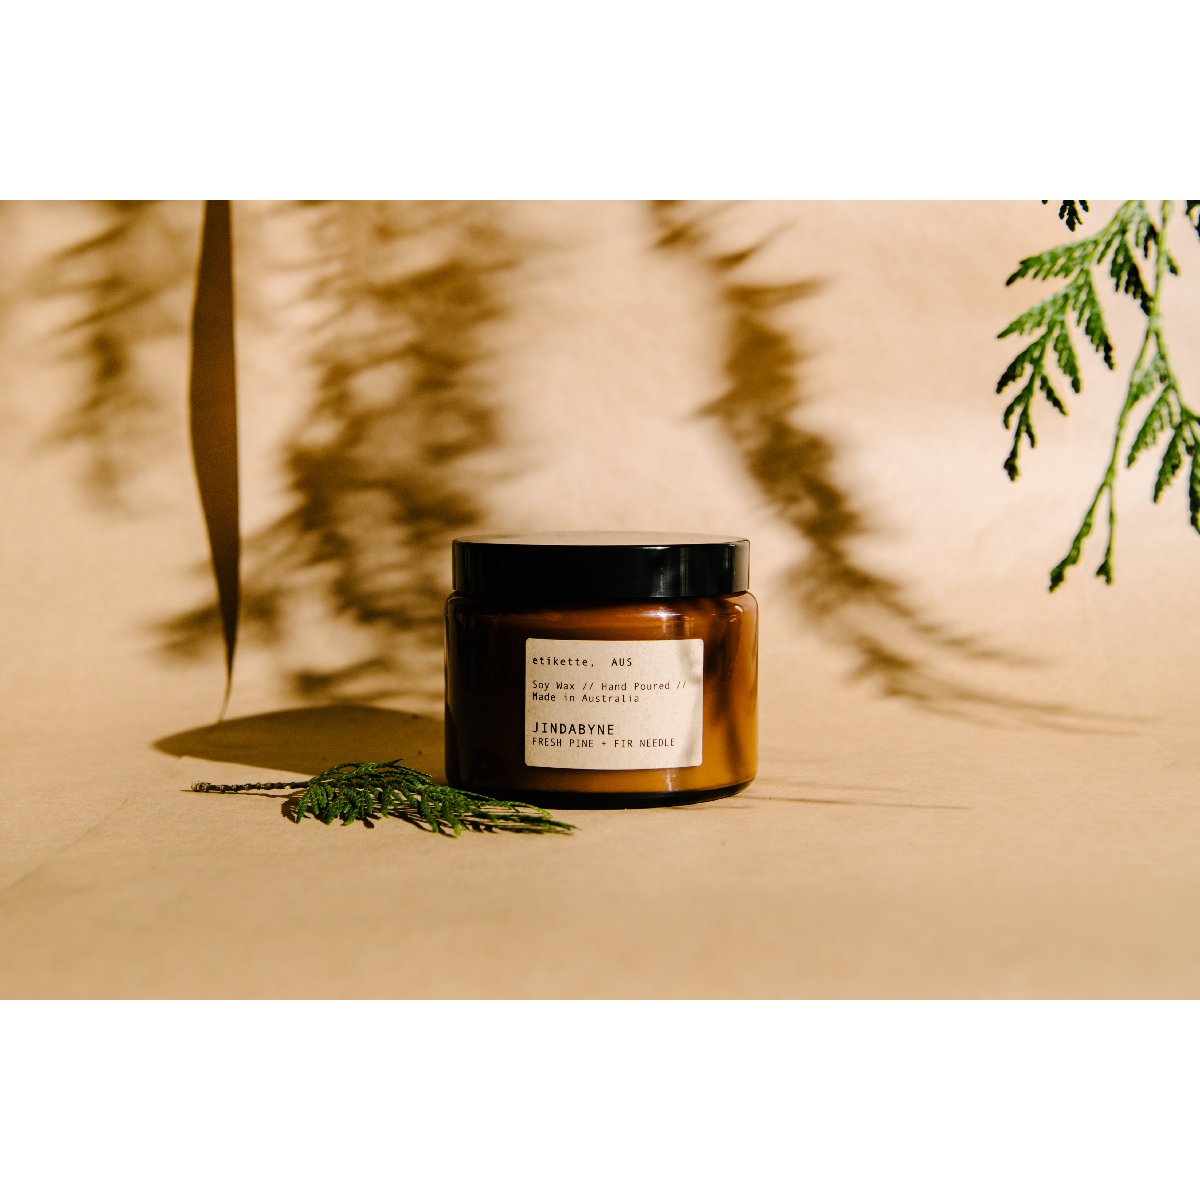 Etikette soy candle | jindabyne fresh fir & pine needle | 500ml